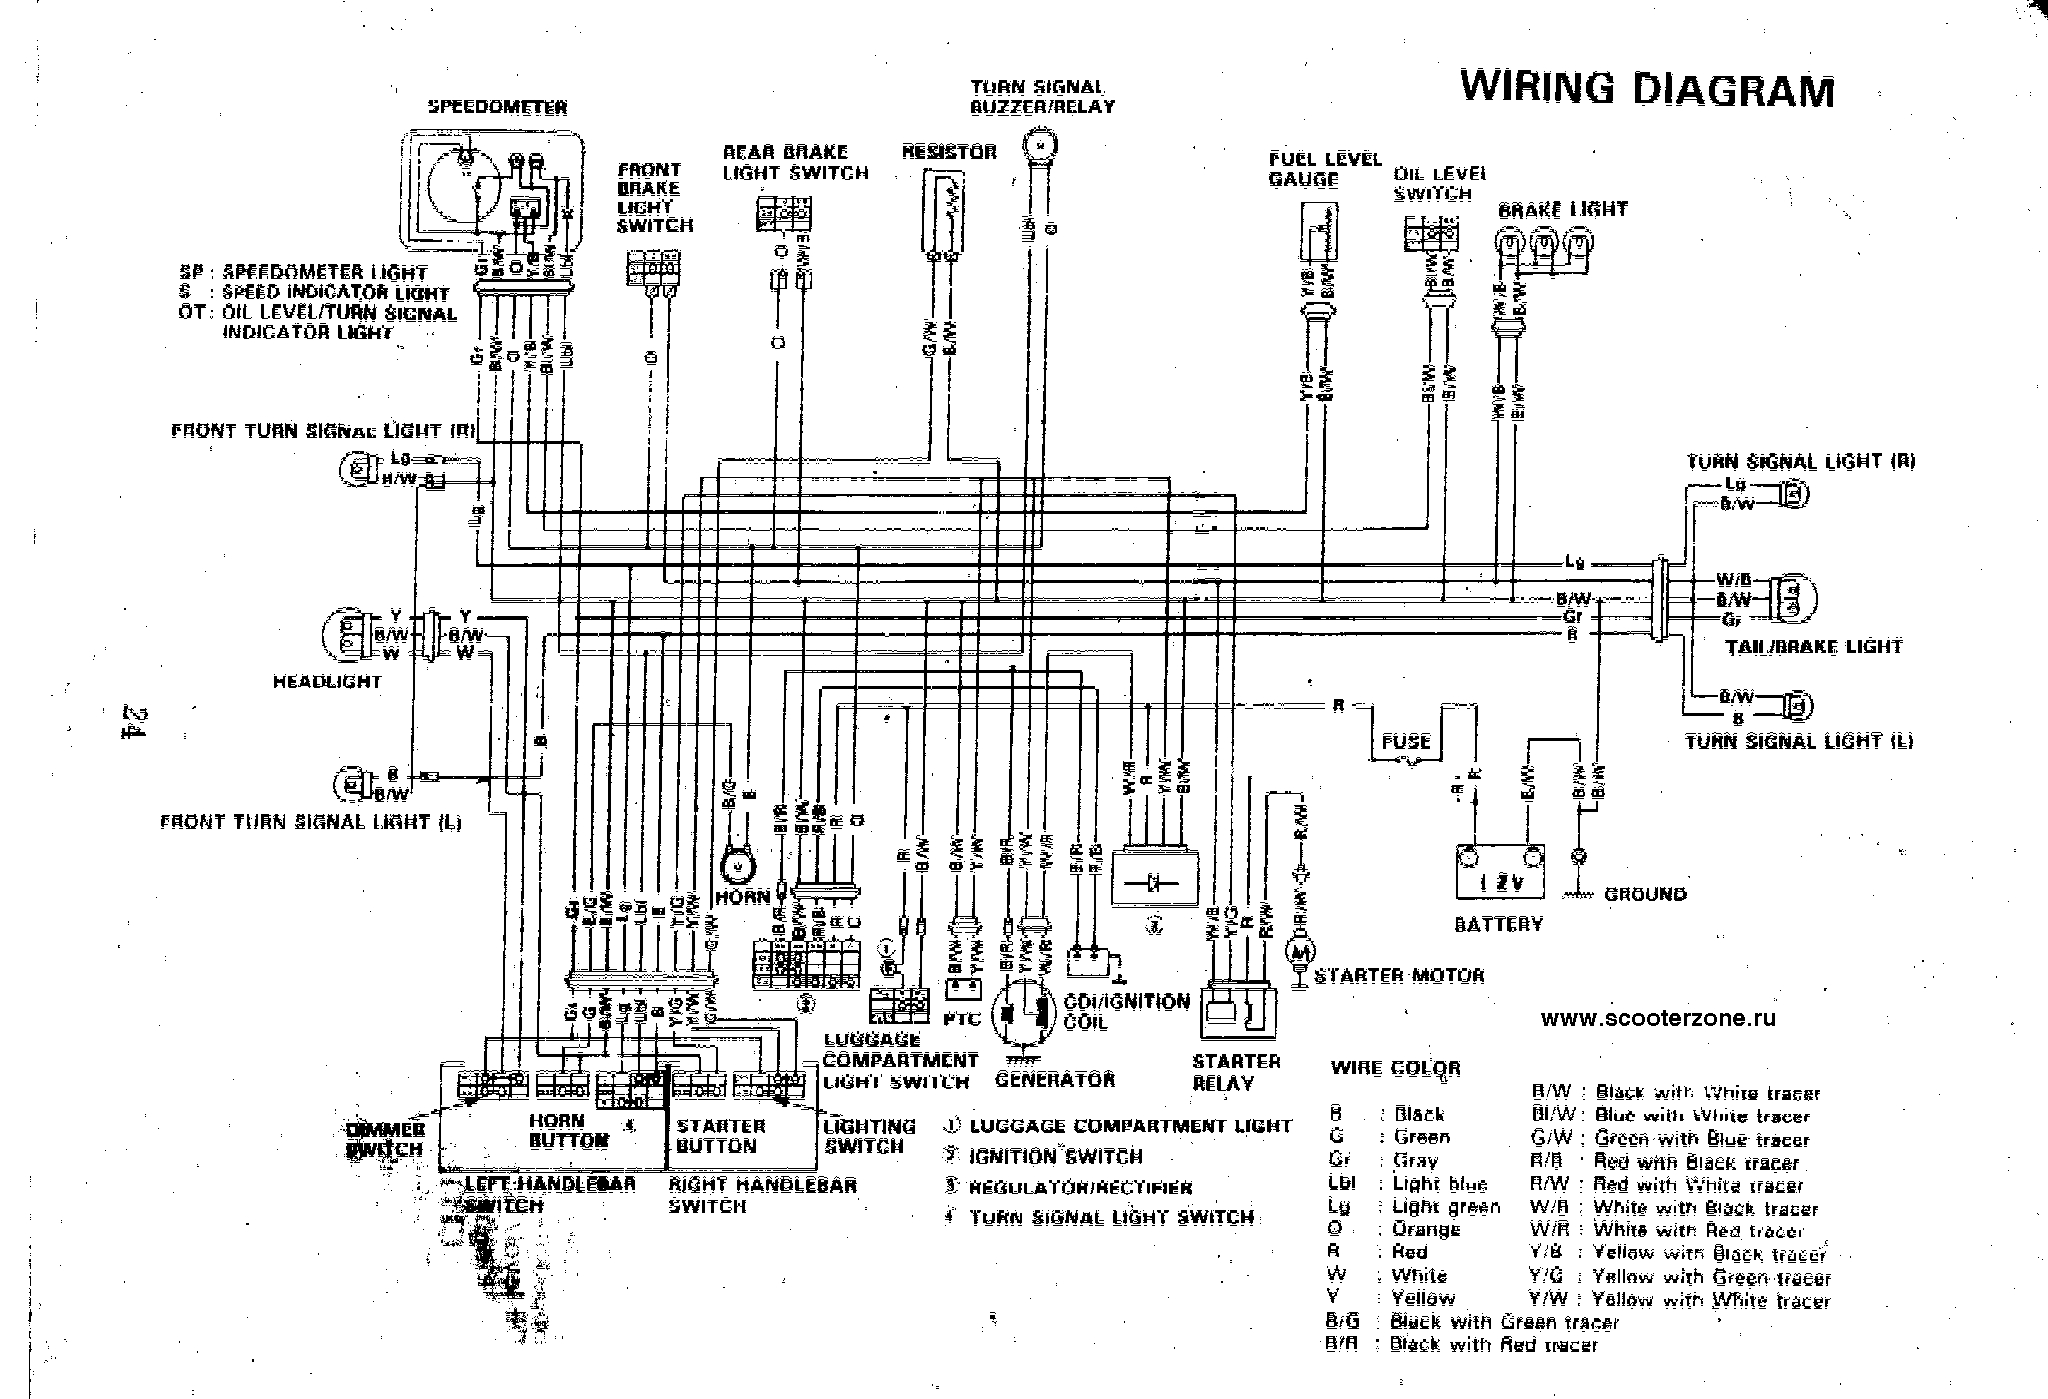 SUZUKI Motorcycles Manual PDF, Wiring Diagram & Fault Codes